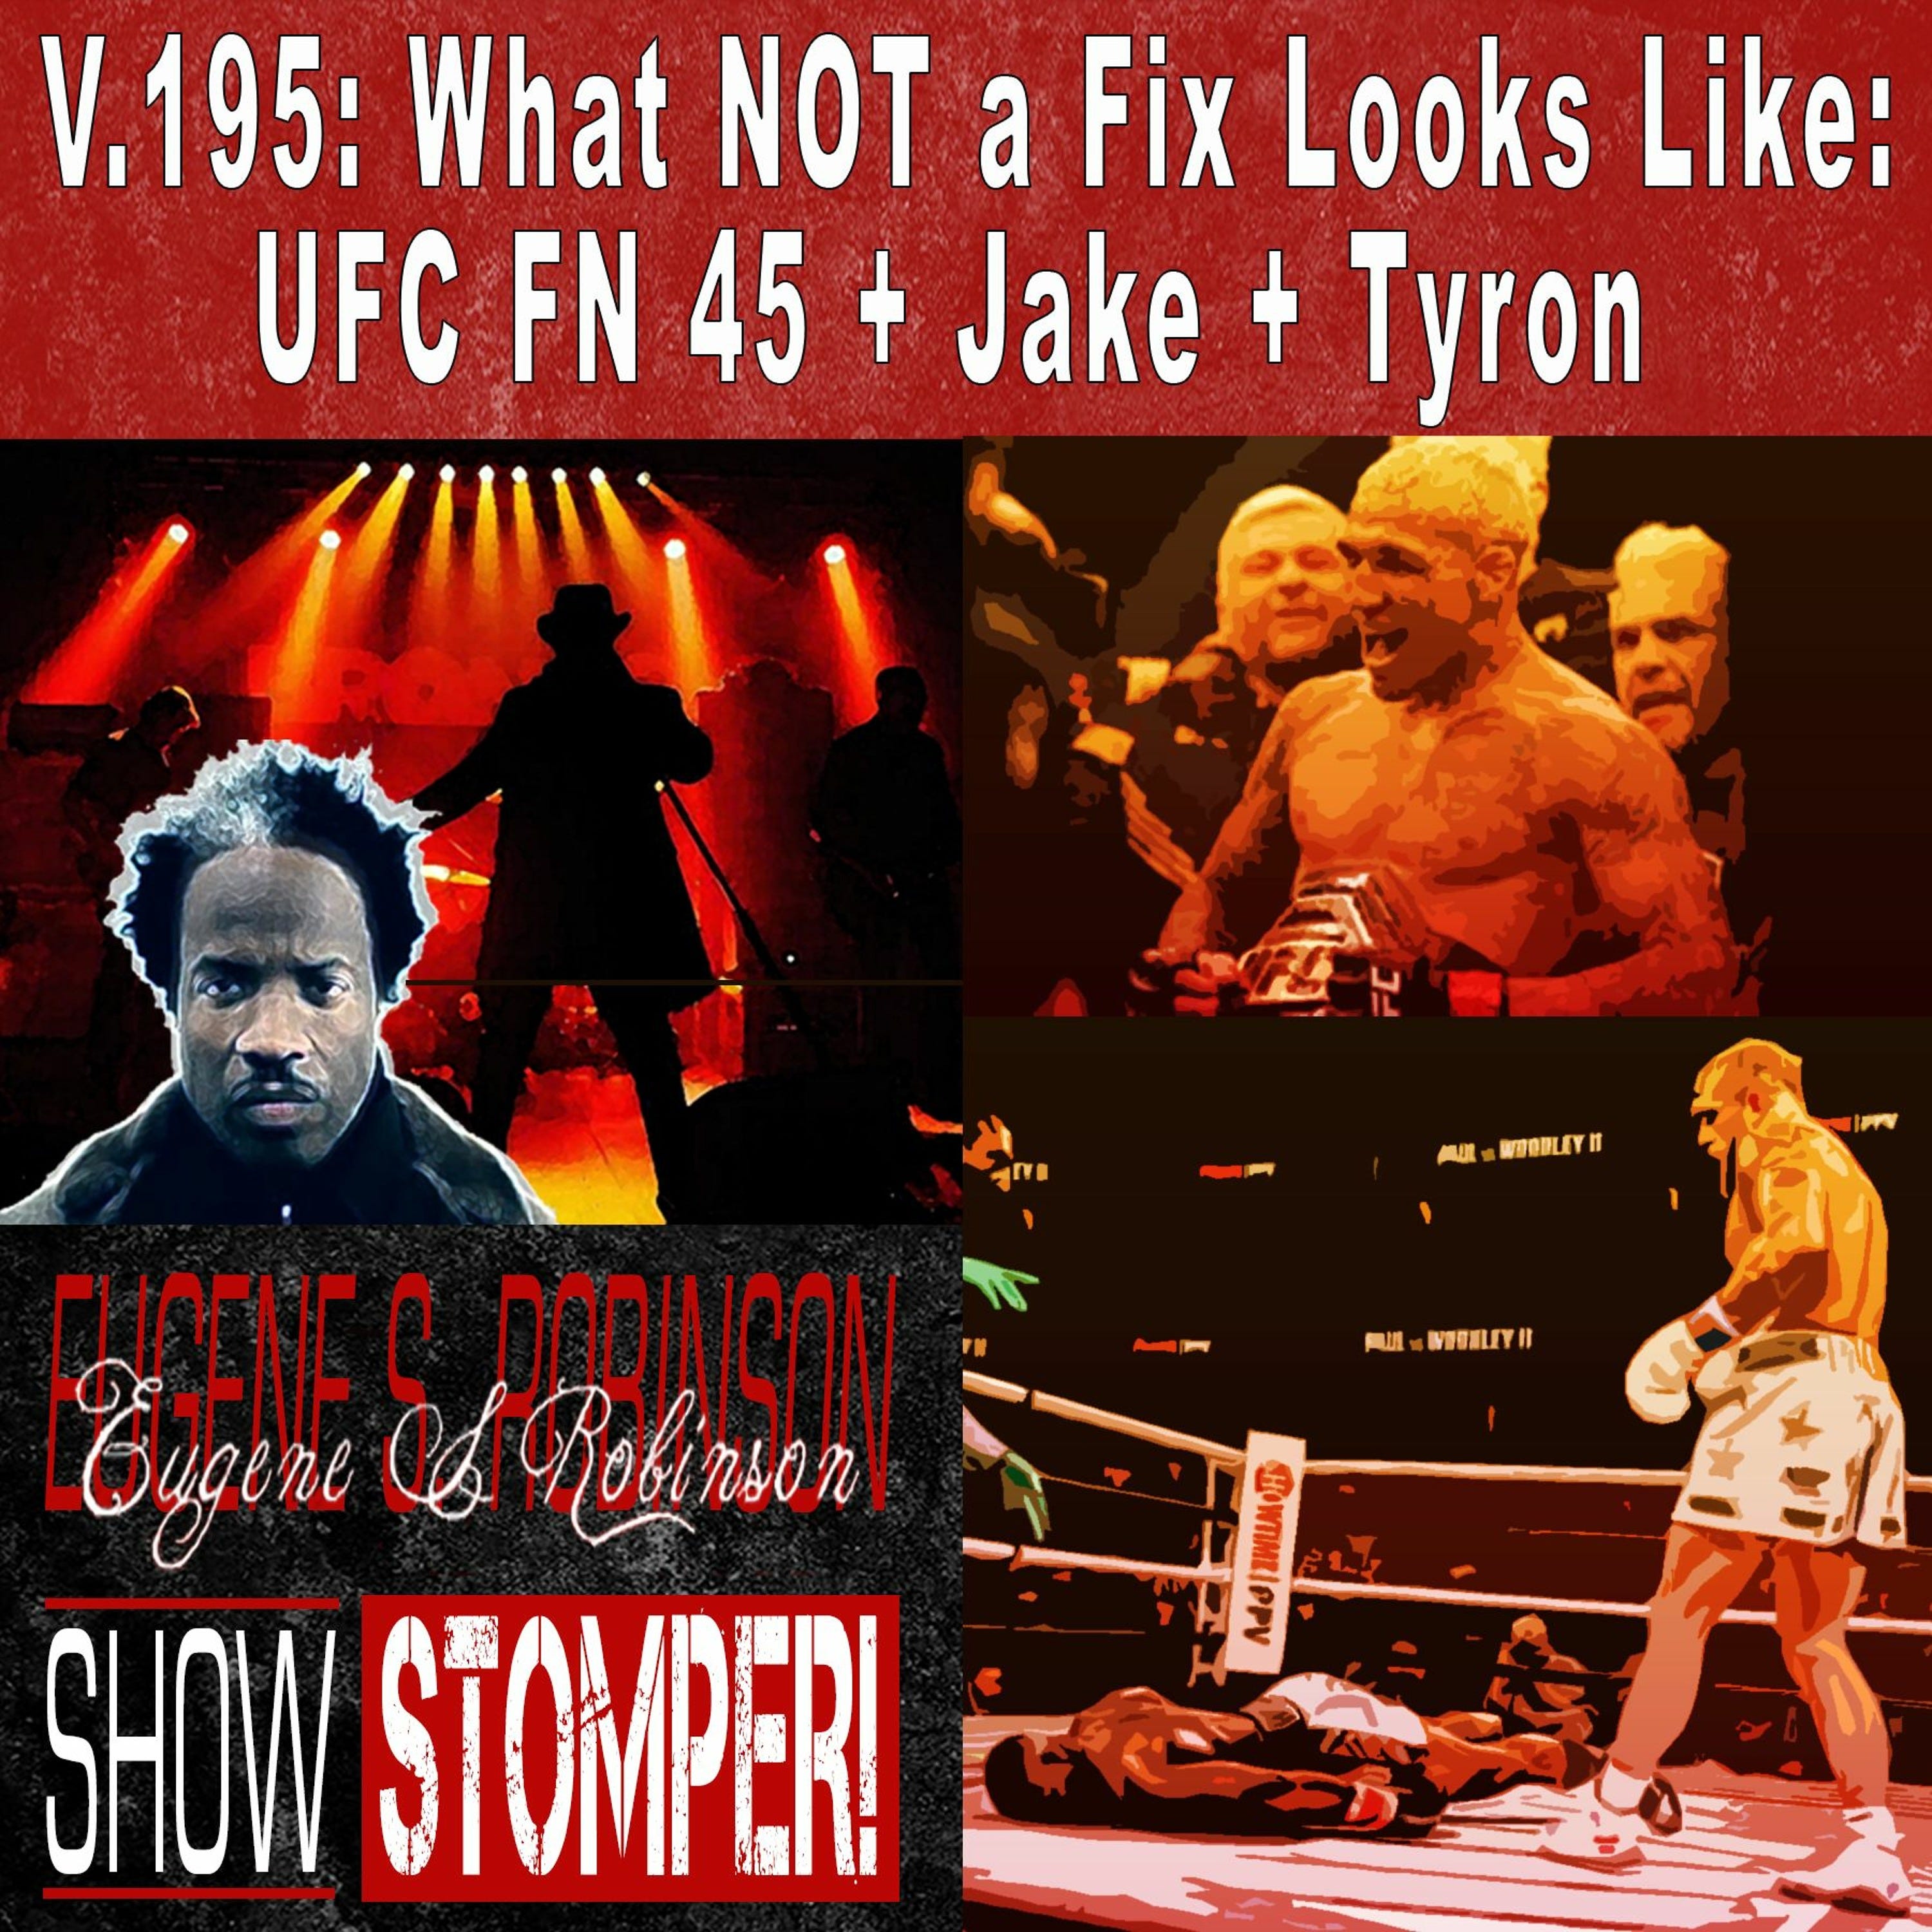 V.195: What NOT a Fix Looks Like: UFC FN 45 + Jake + Tyron